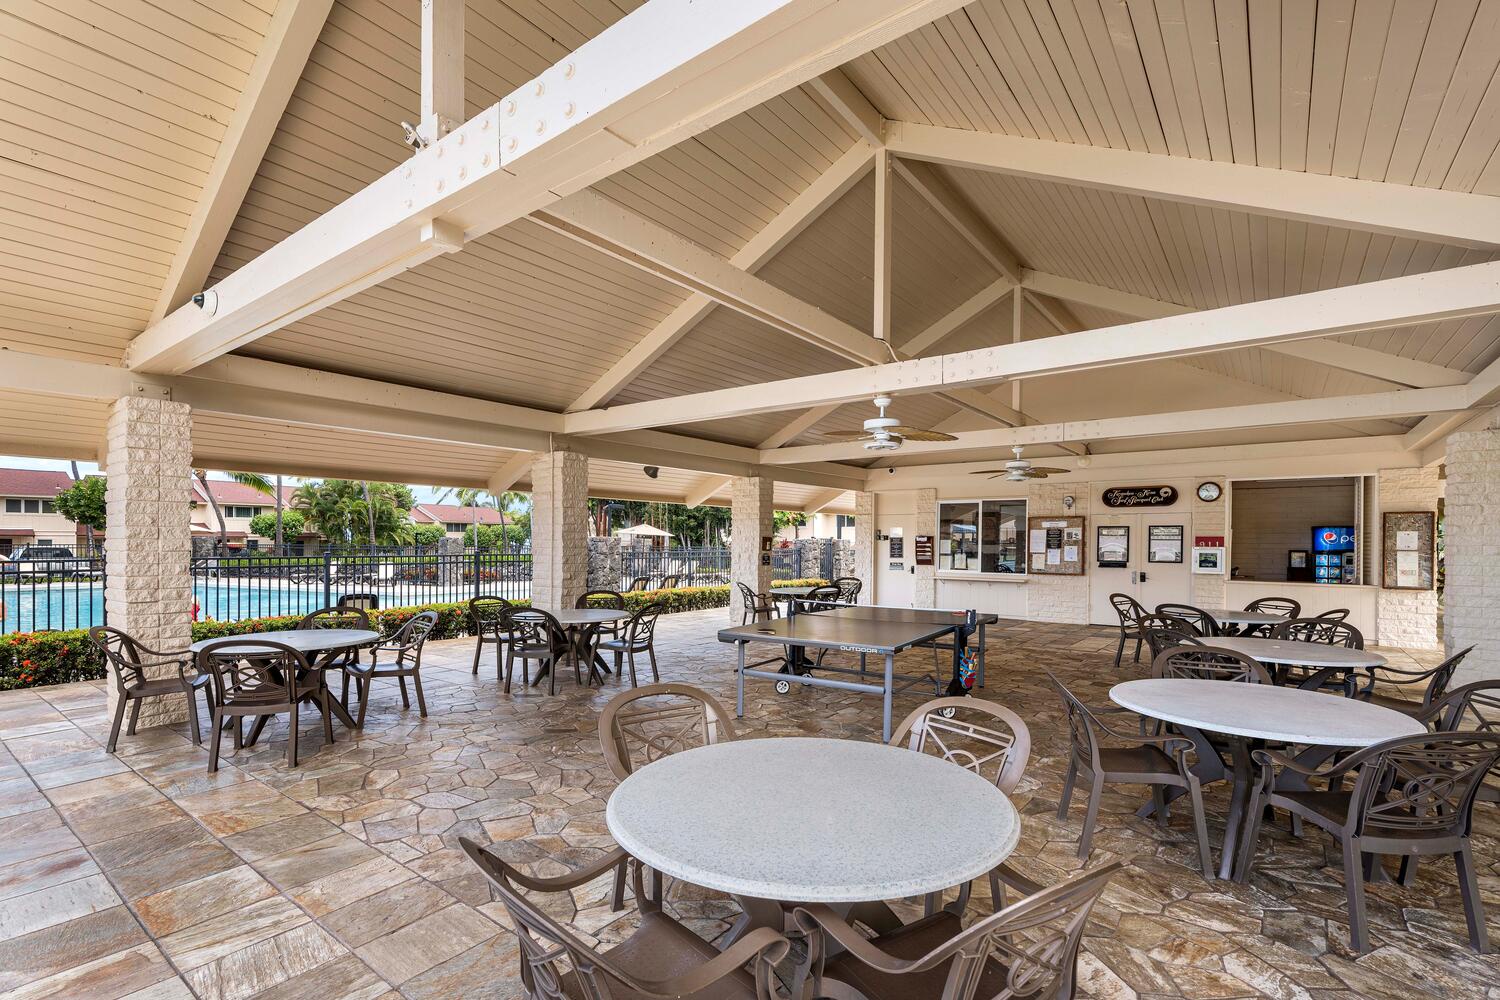 Kailua Kona Vacation Rentals, Keauhou Kona Surf & Racquet 1104 - Community space with outdoor furniture